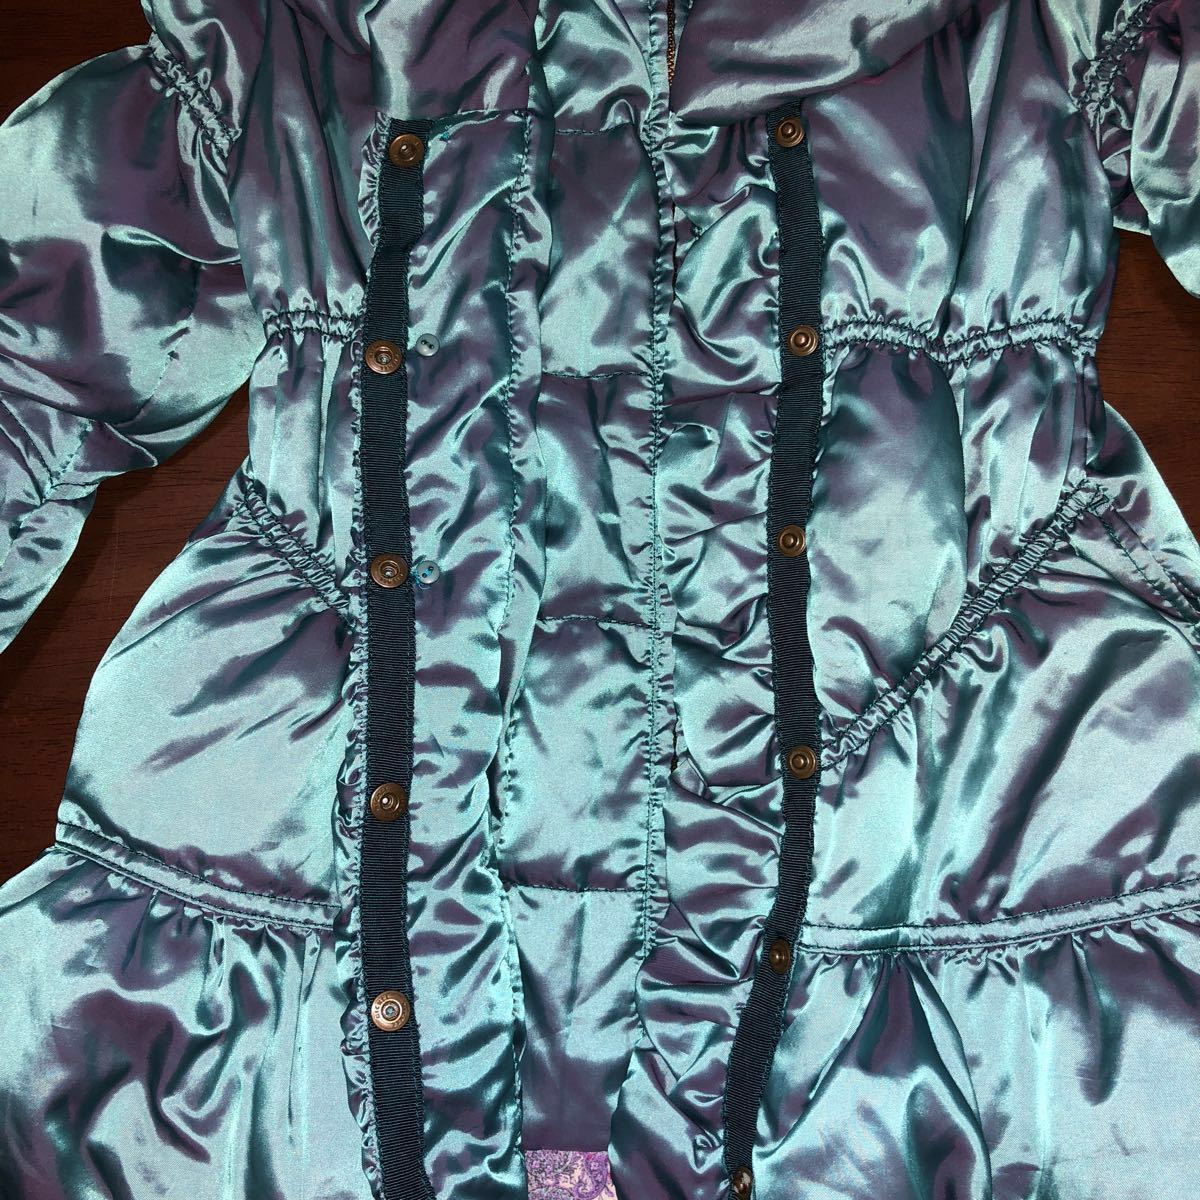 [ANNA SUI mini| Anna Sui Mini ] пуховик верхняя одежда жакет защищающий от холода 100. б/у изумруд зеленый 